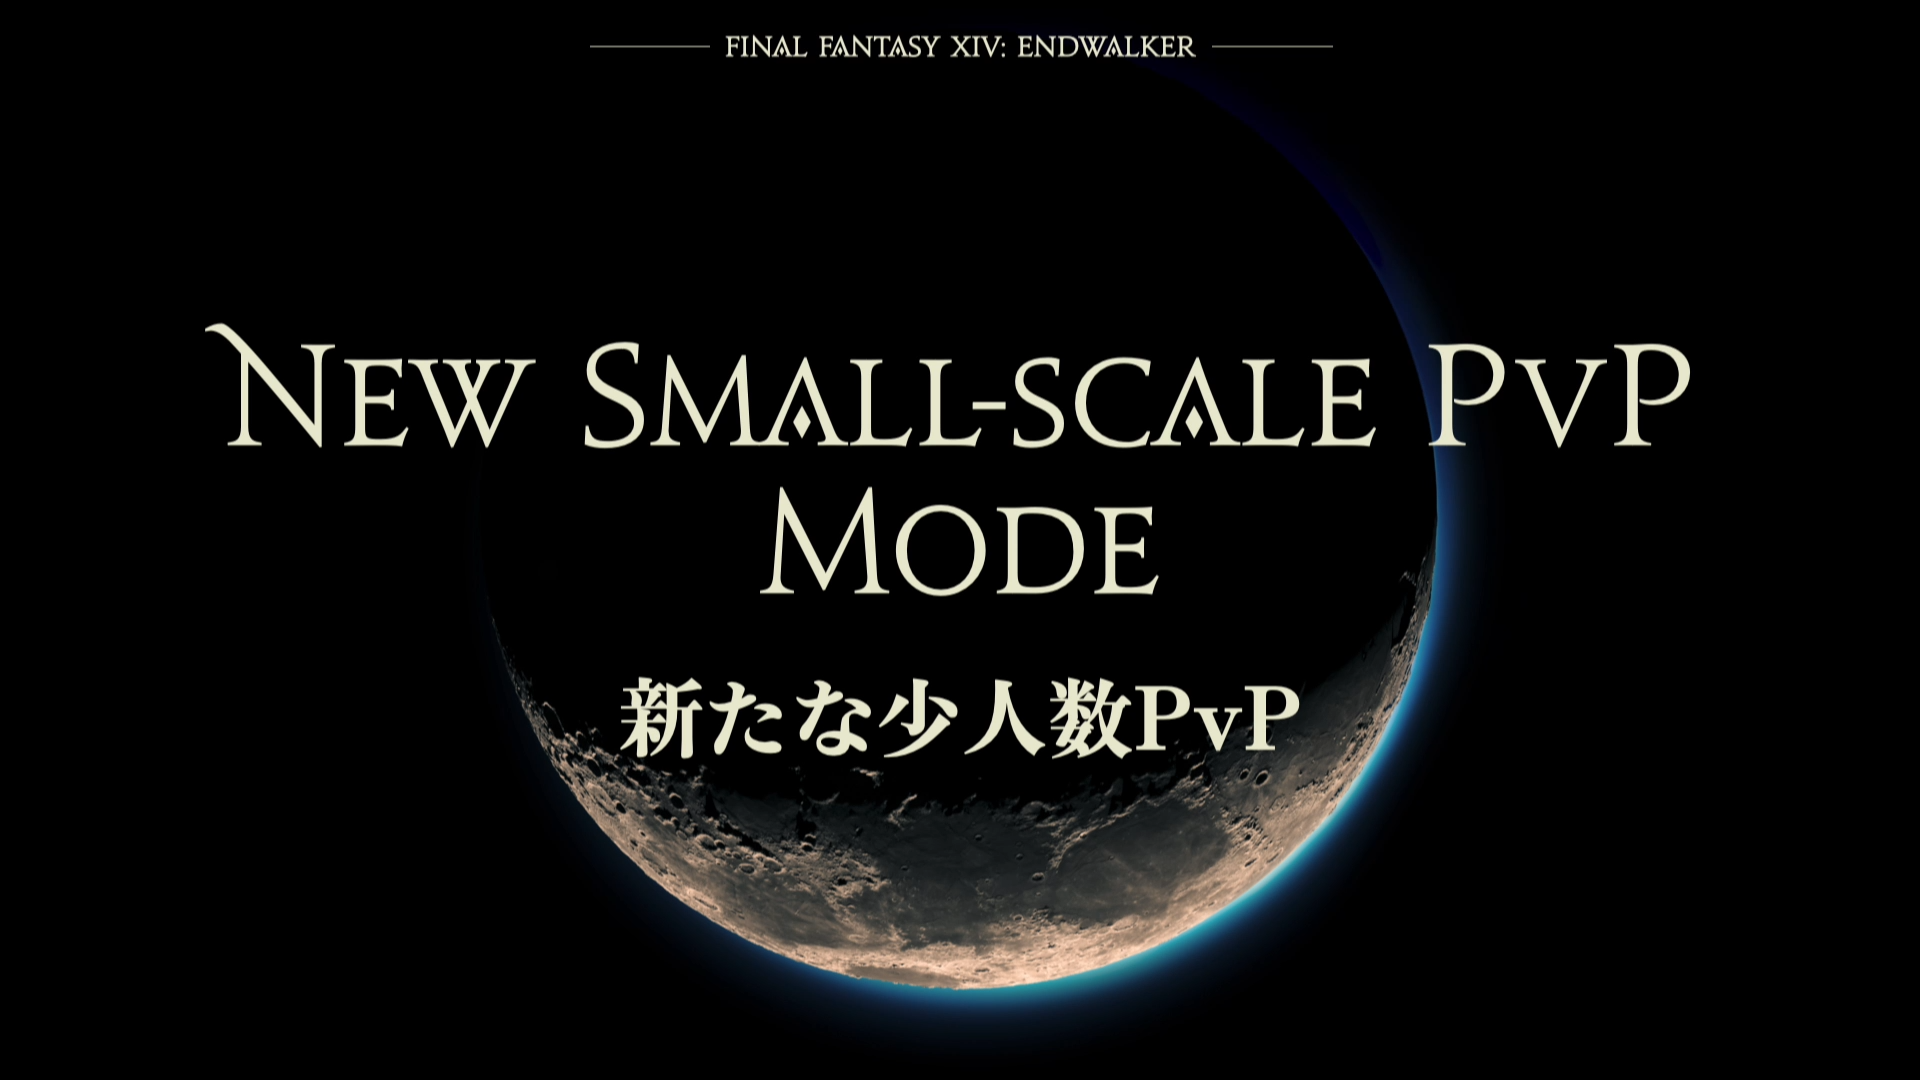 FFXIV 6.0 Endwalker: Small Scale PVP Mode